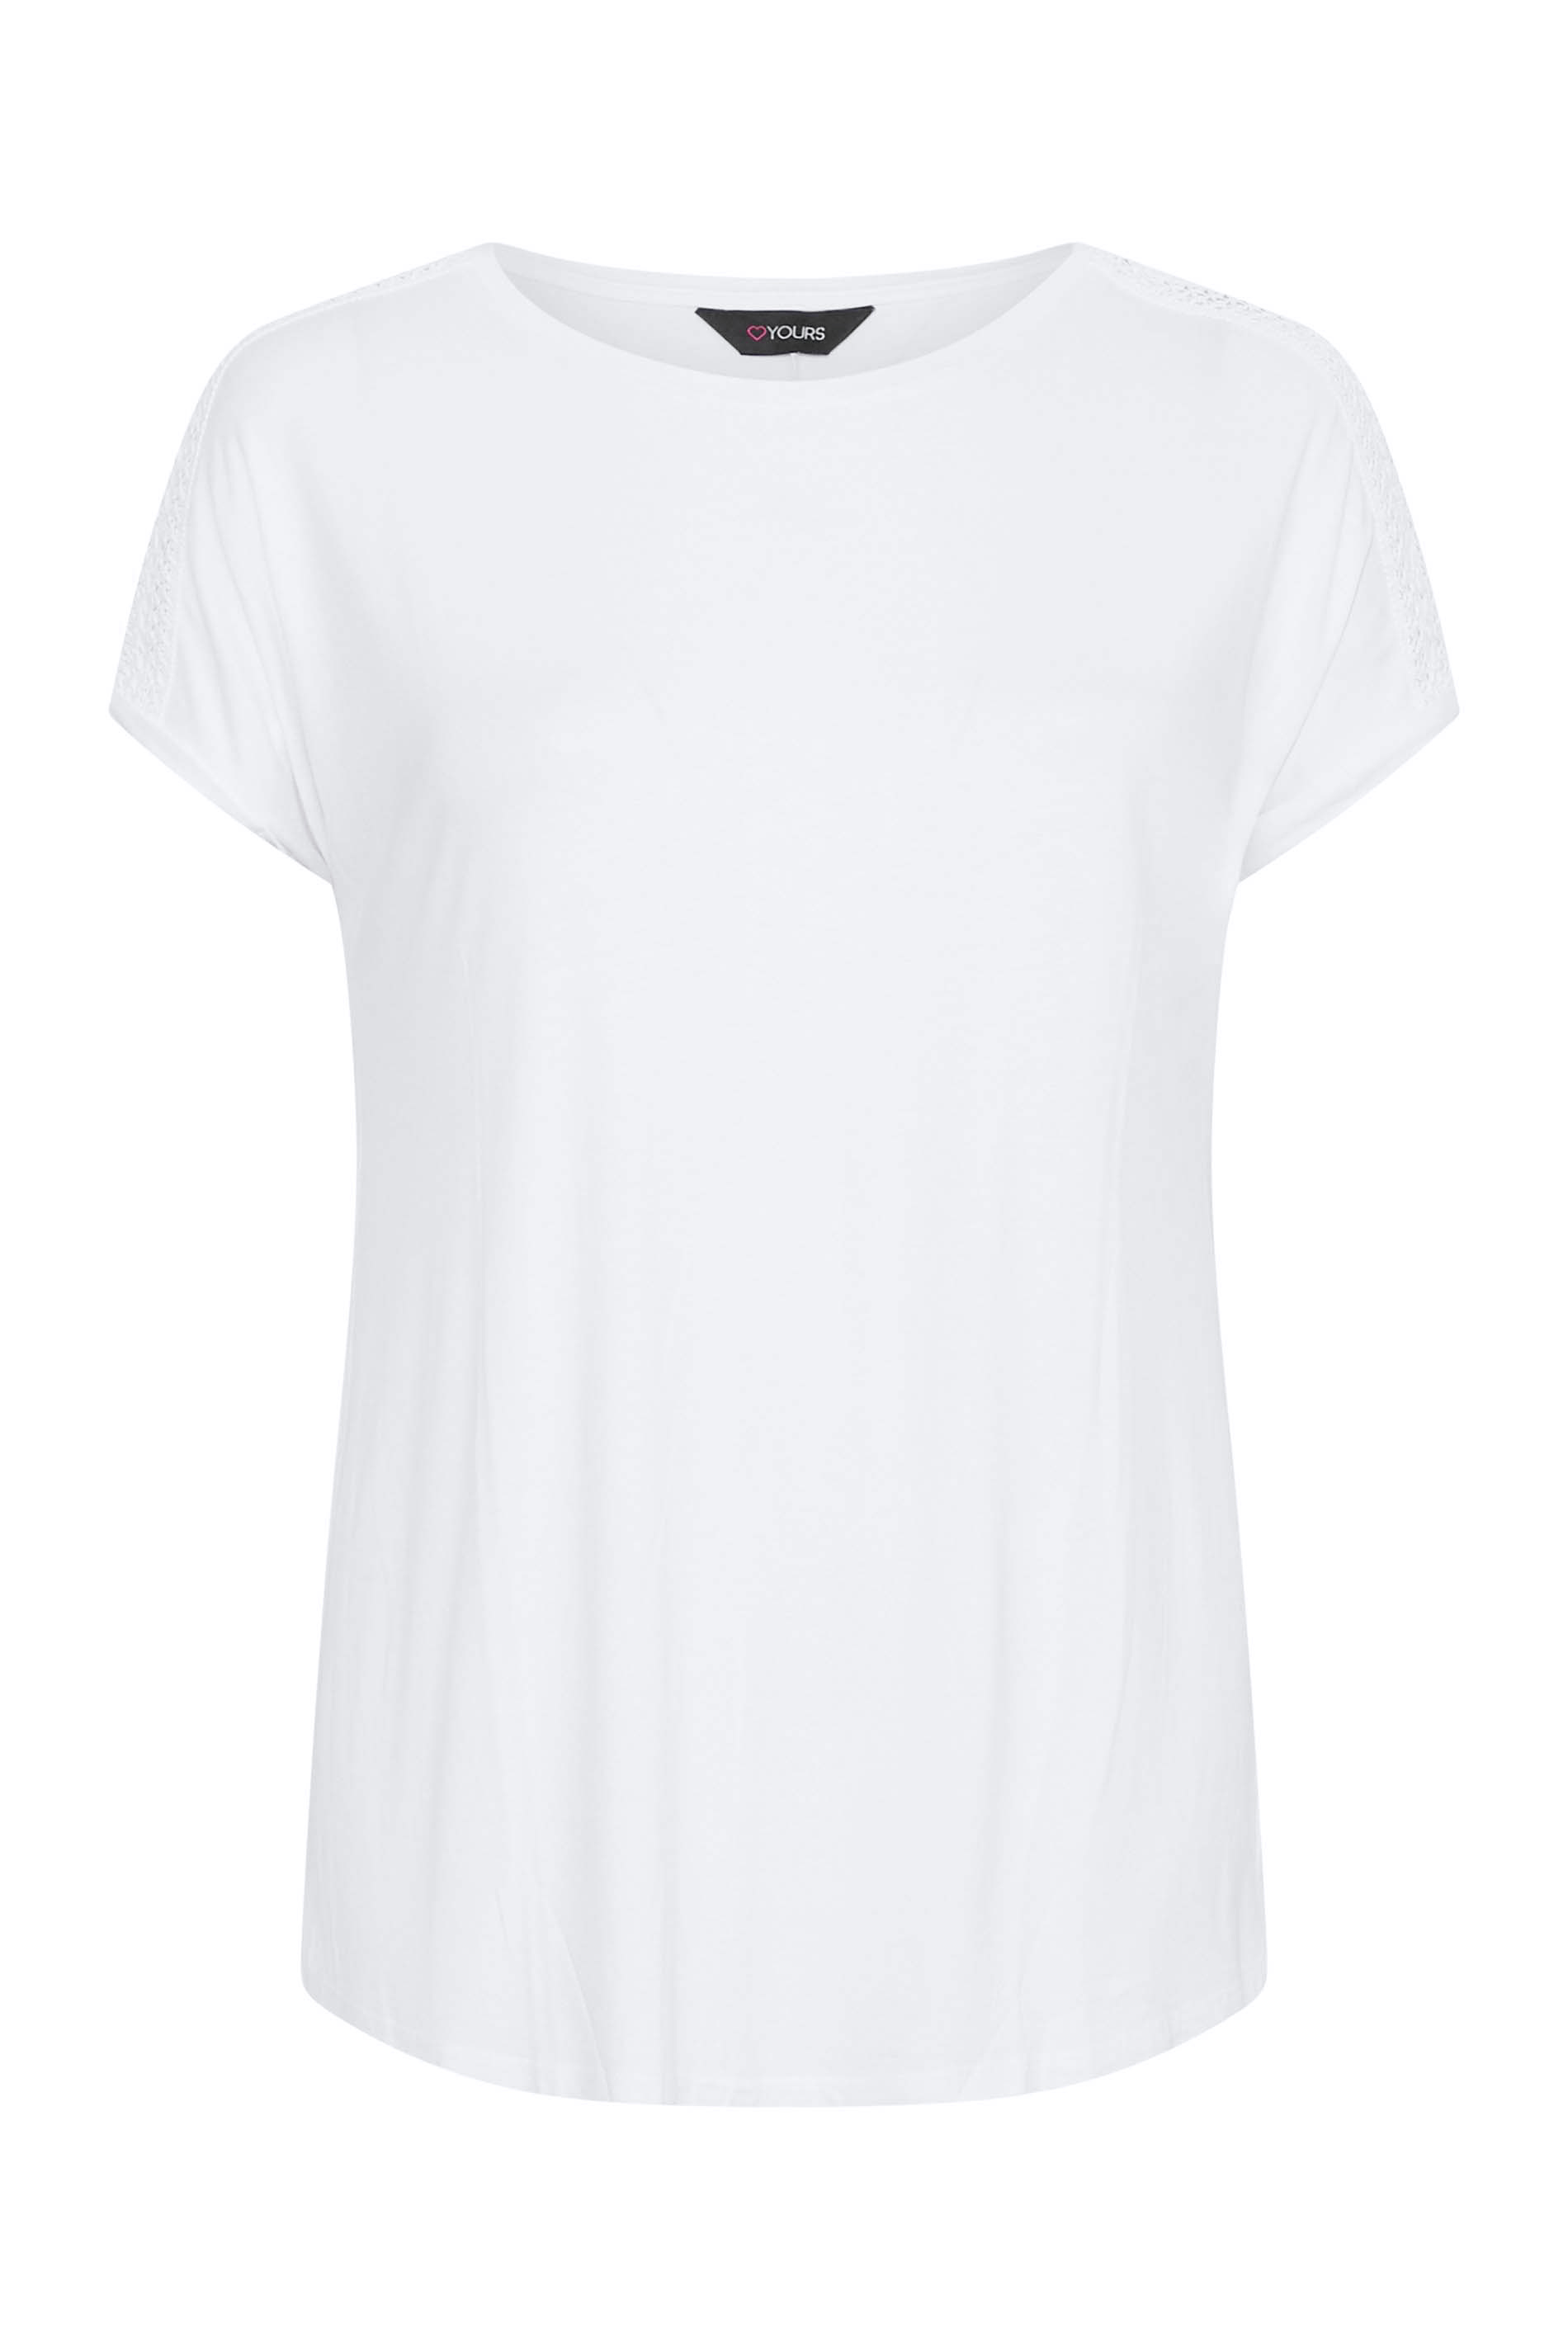 Grande taille  Tops Grande taille  T-Shirts | T-Shirt Blanc Manches Courtes à Crochet - HG90830